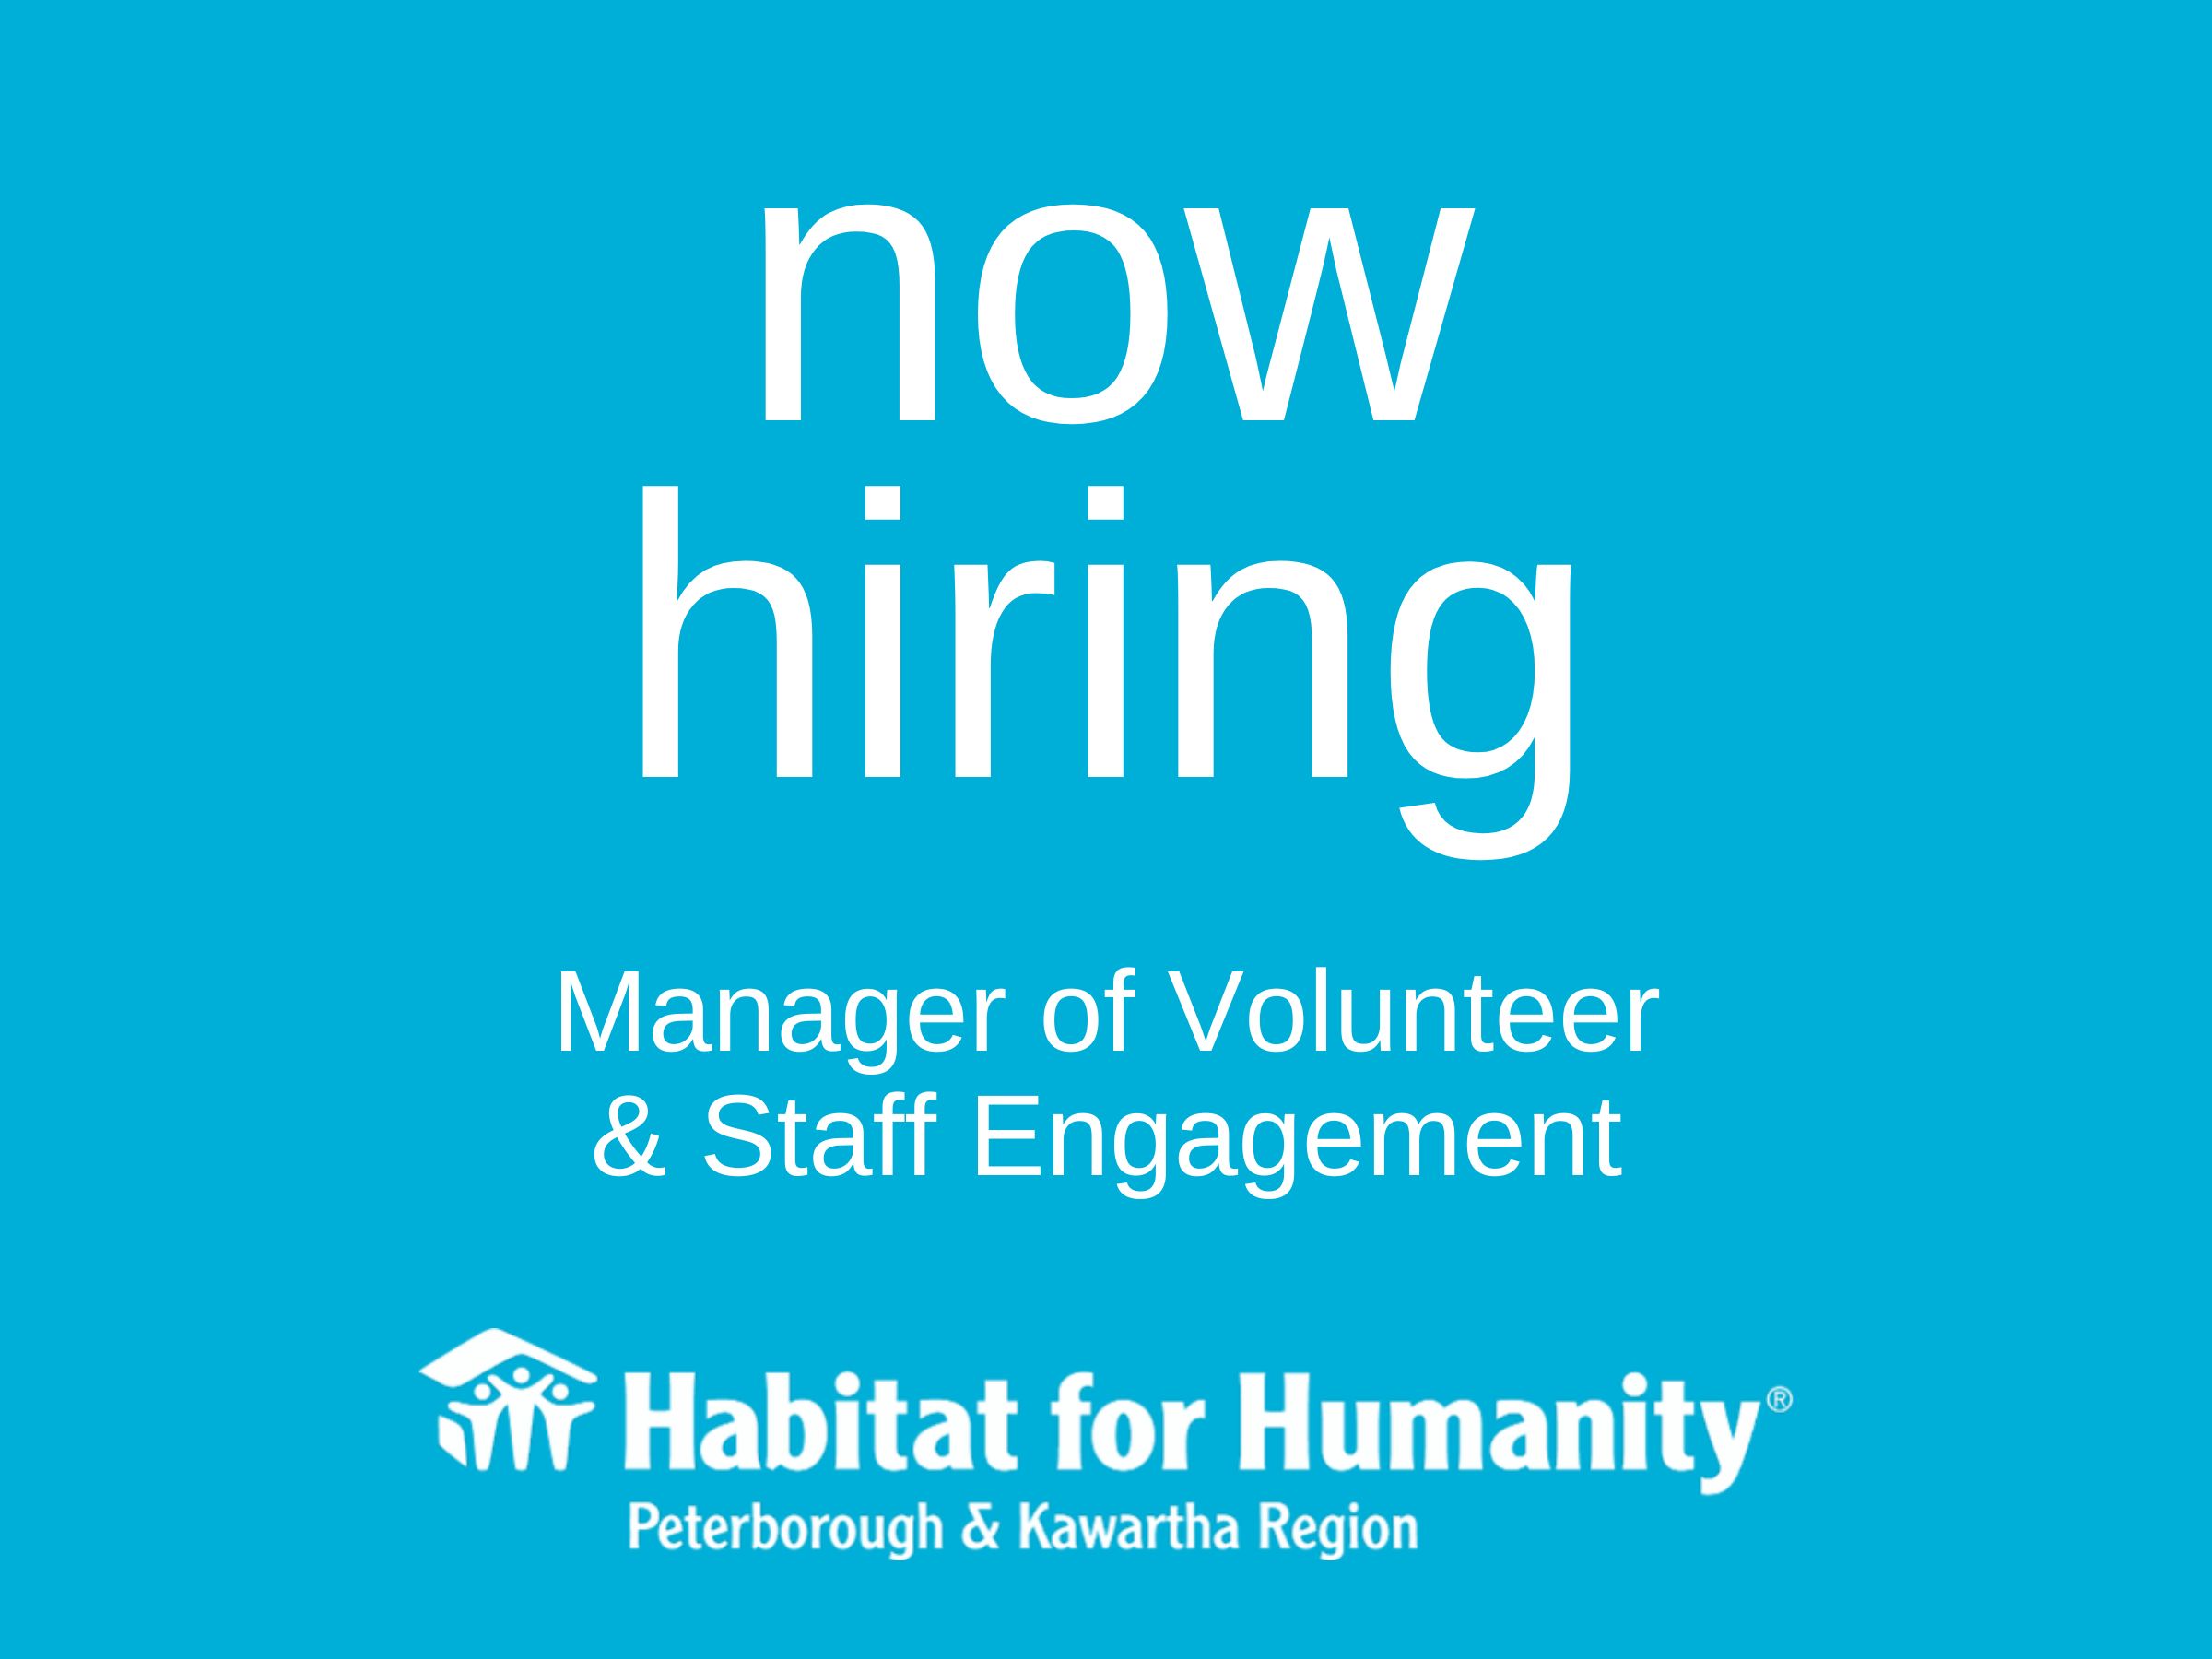 Habitat for Humanity Peterborough & Kawartha Region is hiring a Manager of Volunteer & Staff Engagement